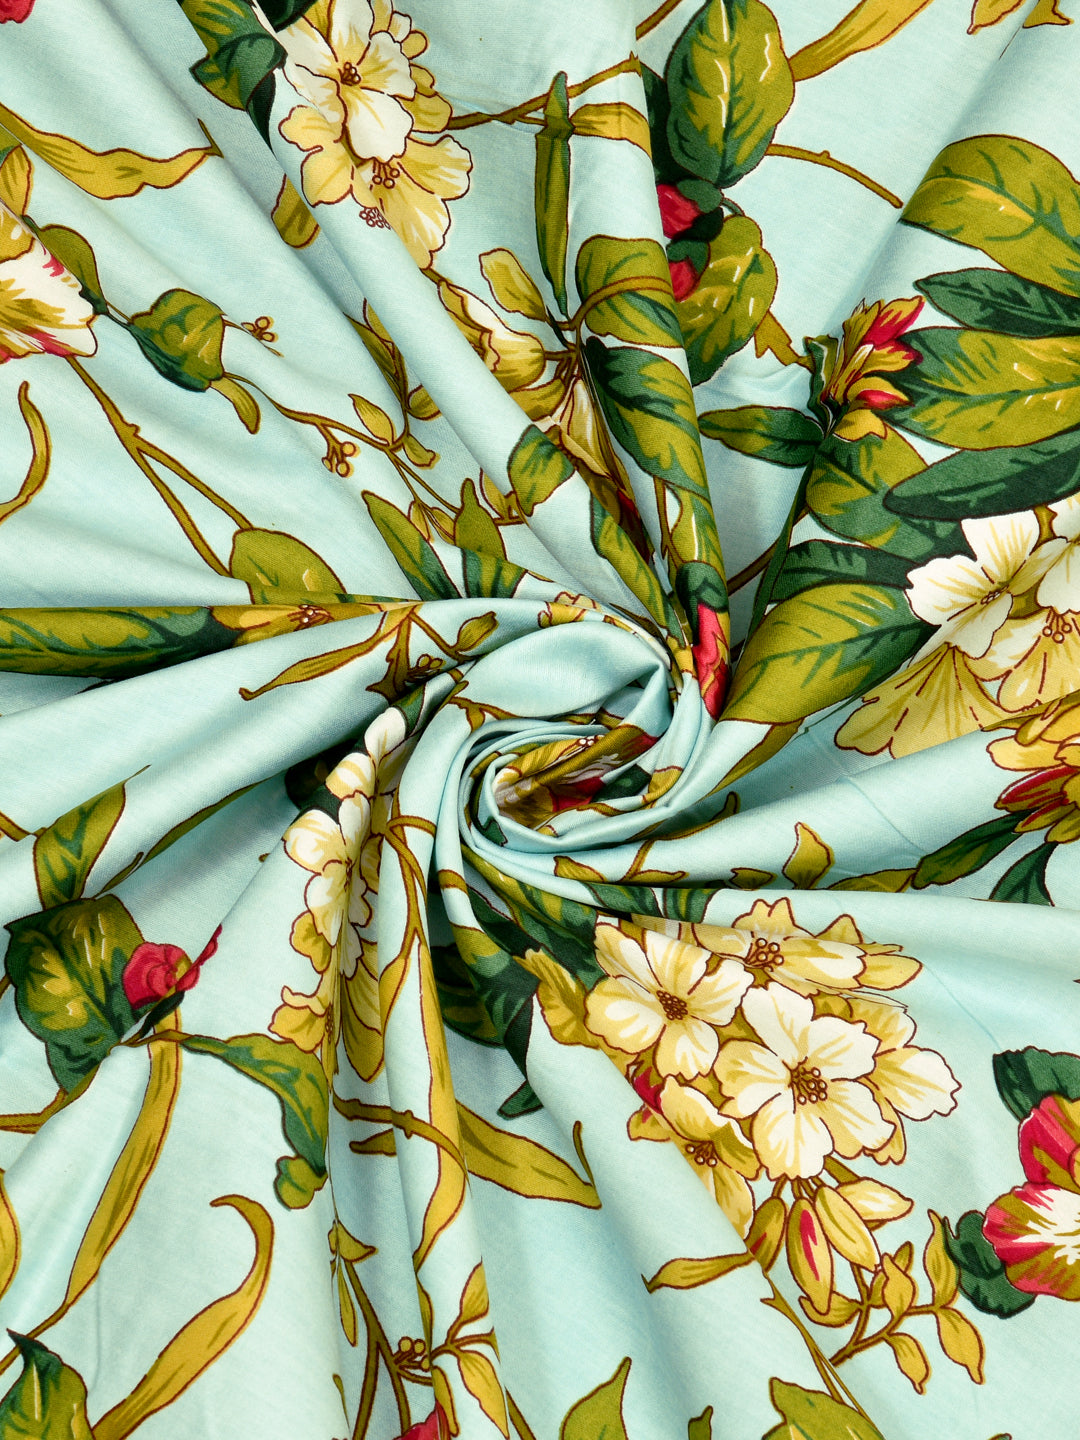 Premium Glaze Cotton Floral Print Super King Bedsheet with 2 Pillow Covers